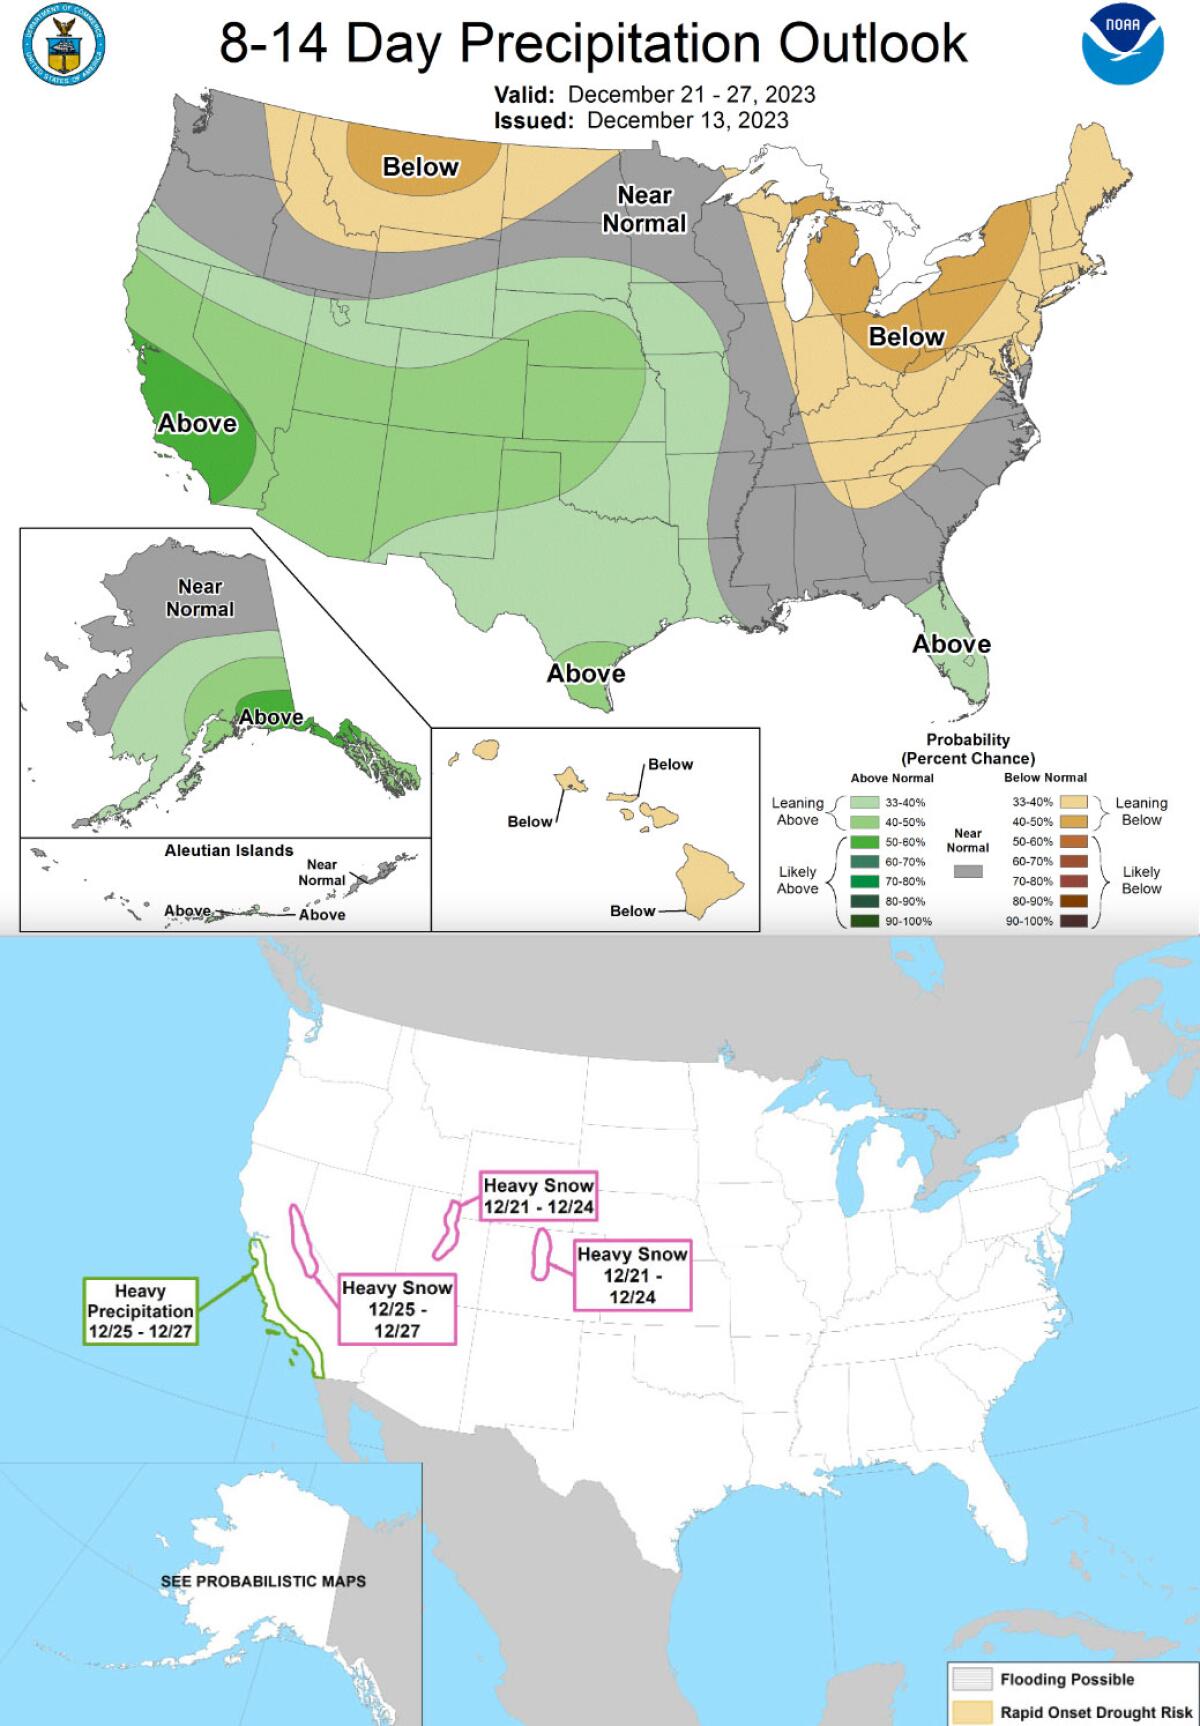 Maps of the U.S. showing precipitation forecasts.